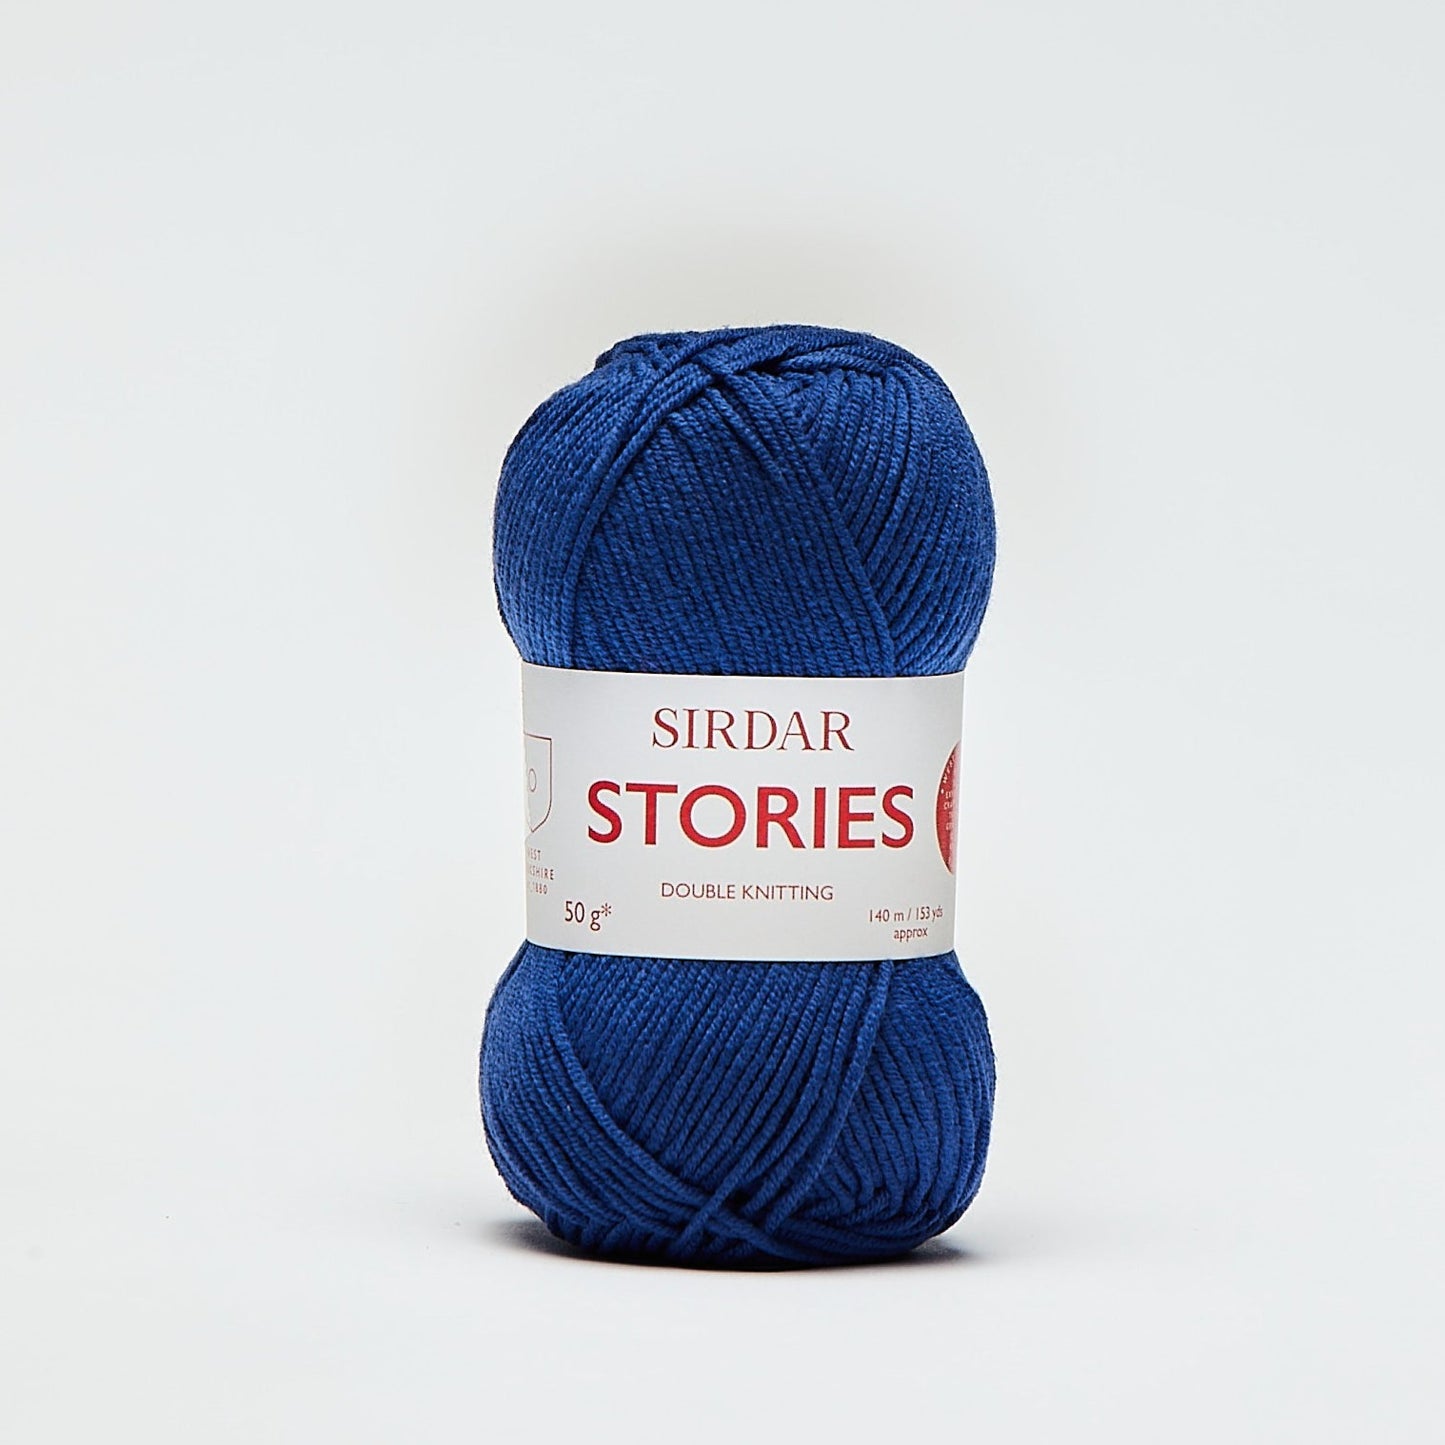 Sirdar Stories DK